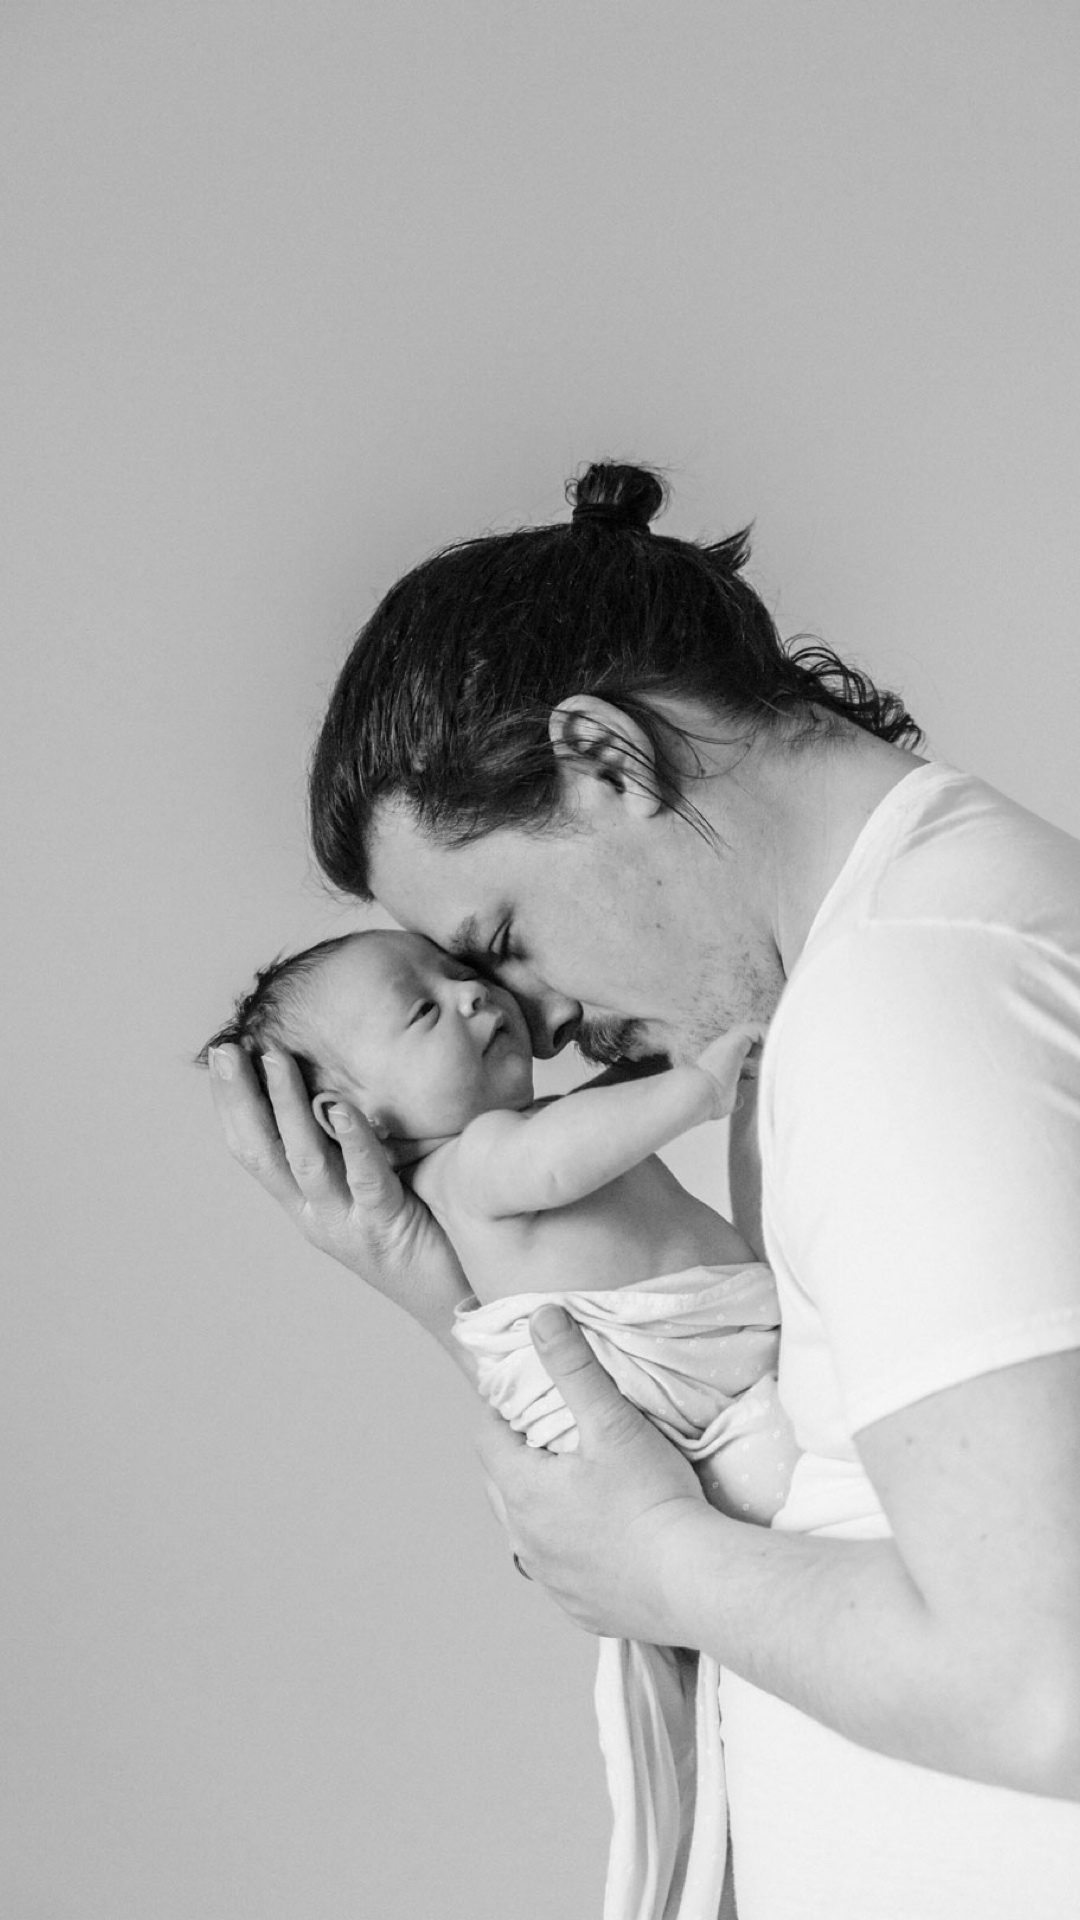 Nashville Newborn Photographer, lifestyle newborn photography, fatherhood session, daddy daughter photography